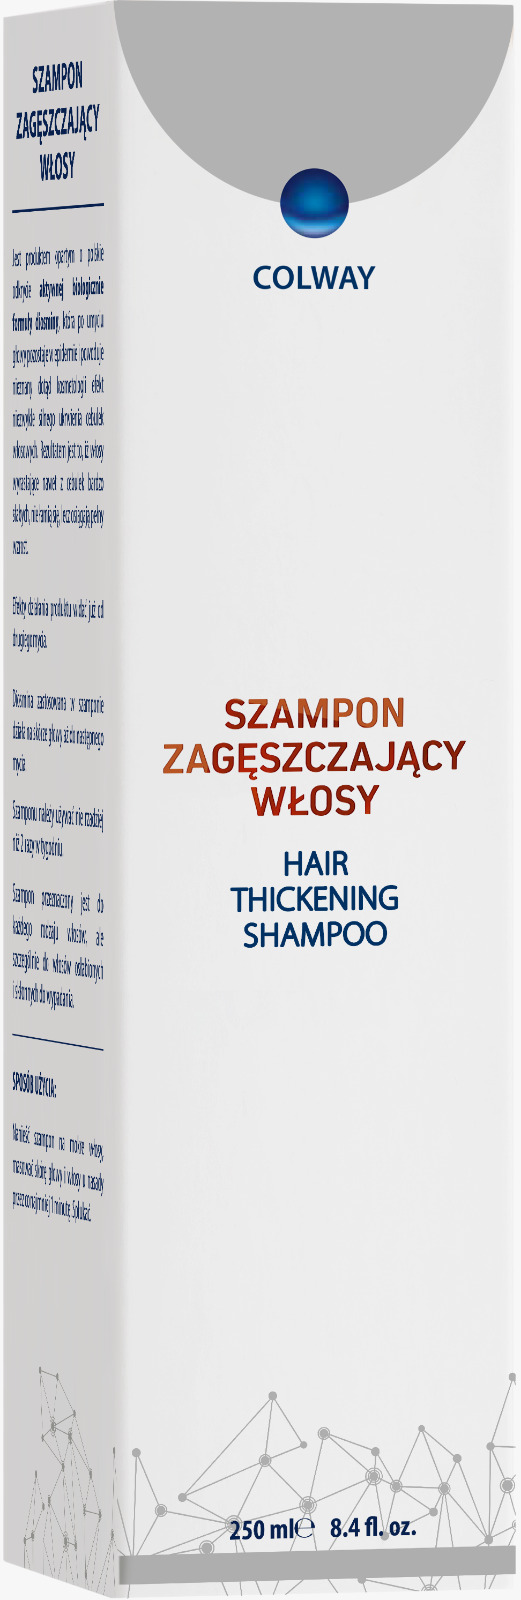 szampon colway skład